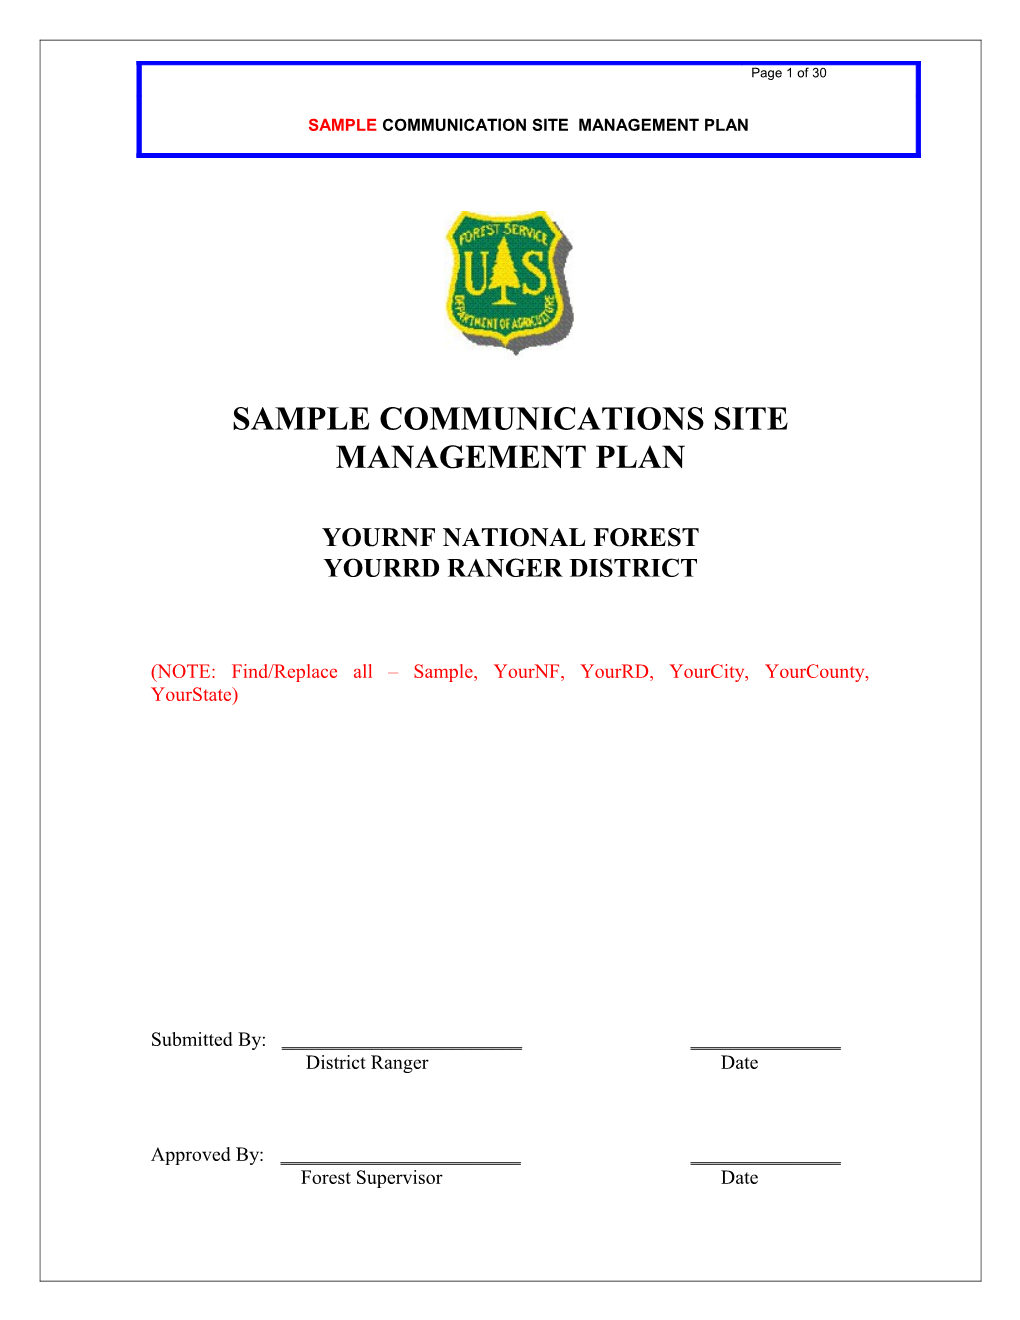 Sample Communications Site Management Plan